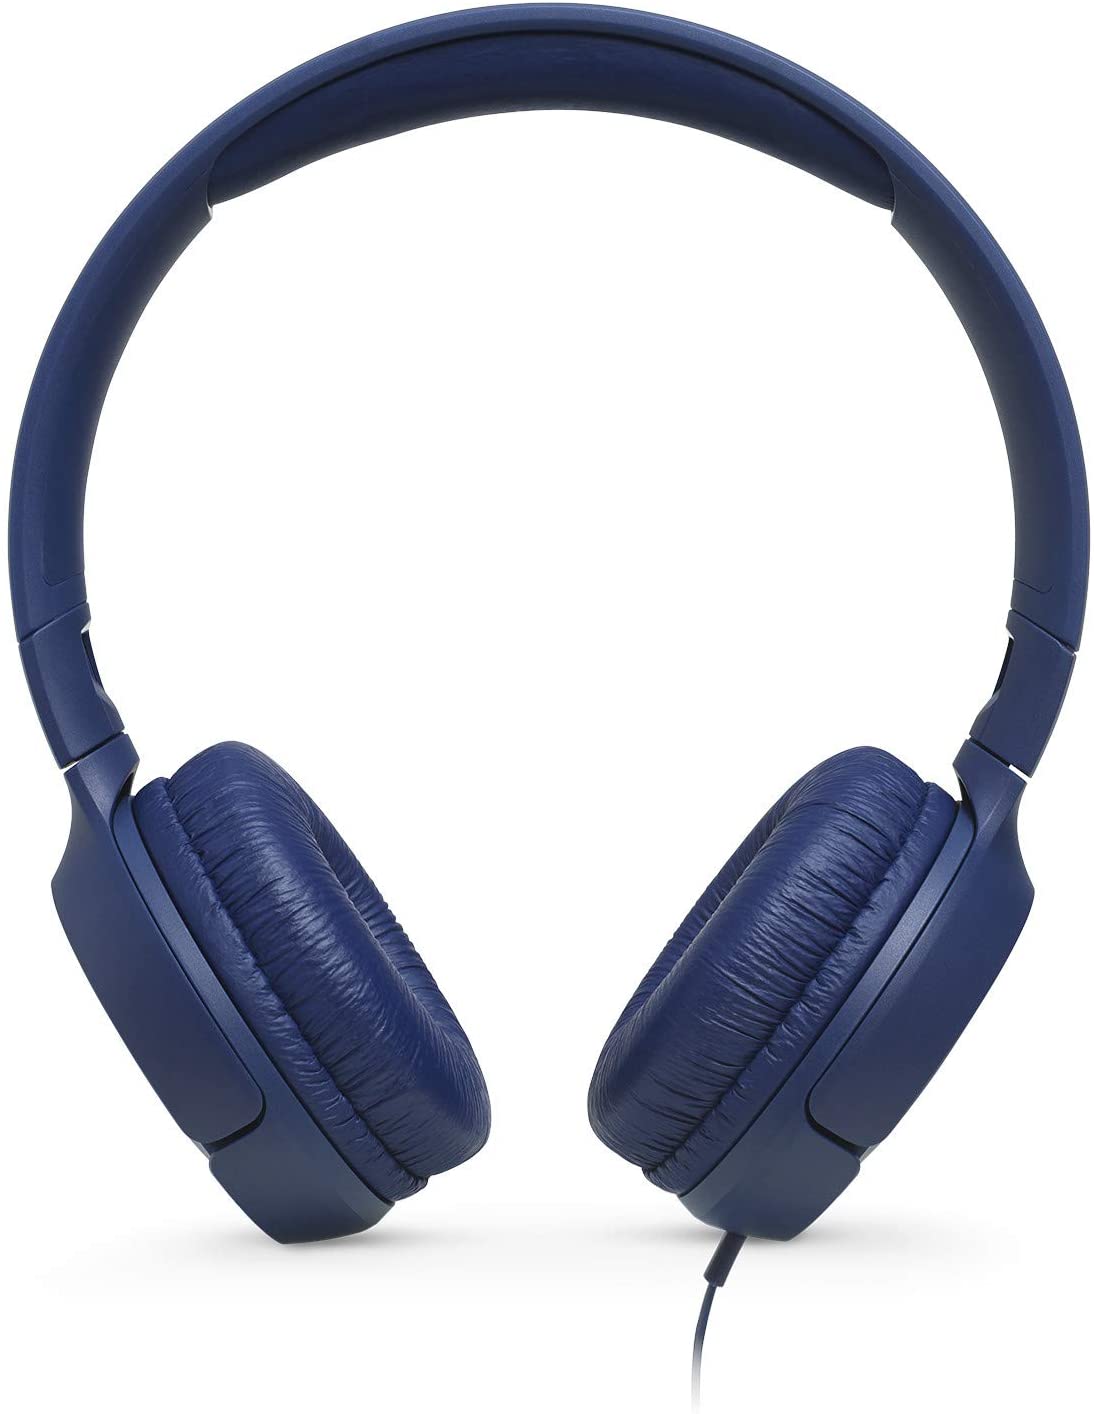 JBL TUNE 500 Wired Headphones